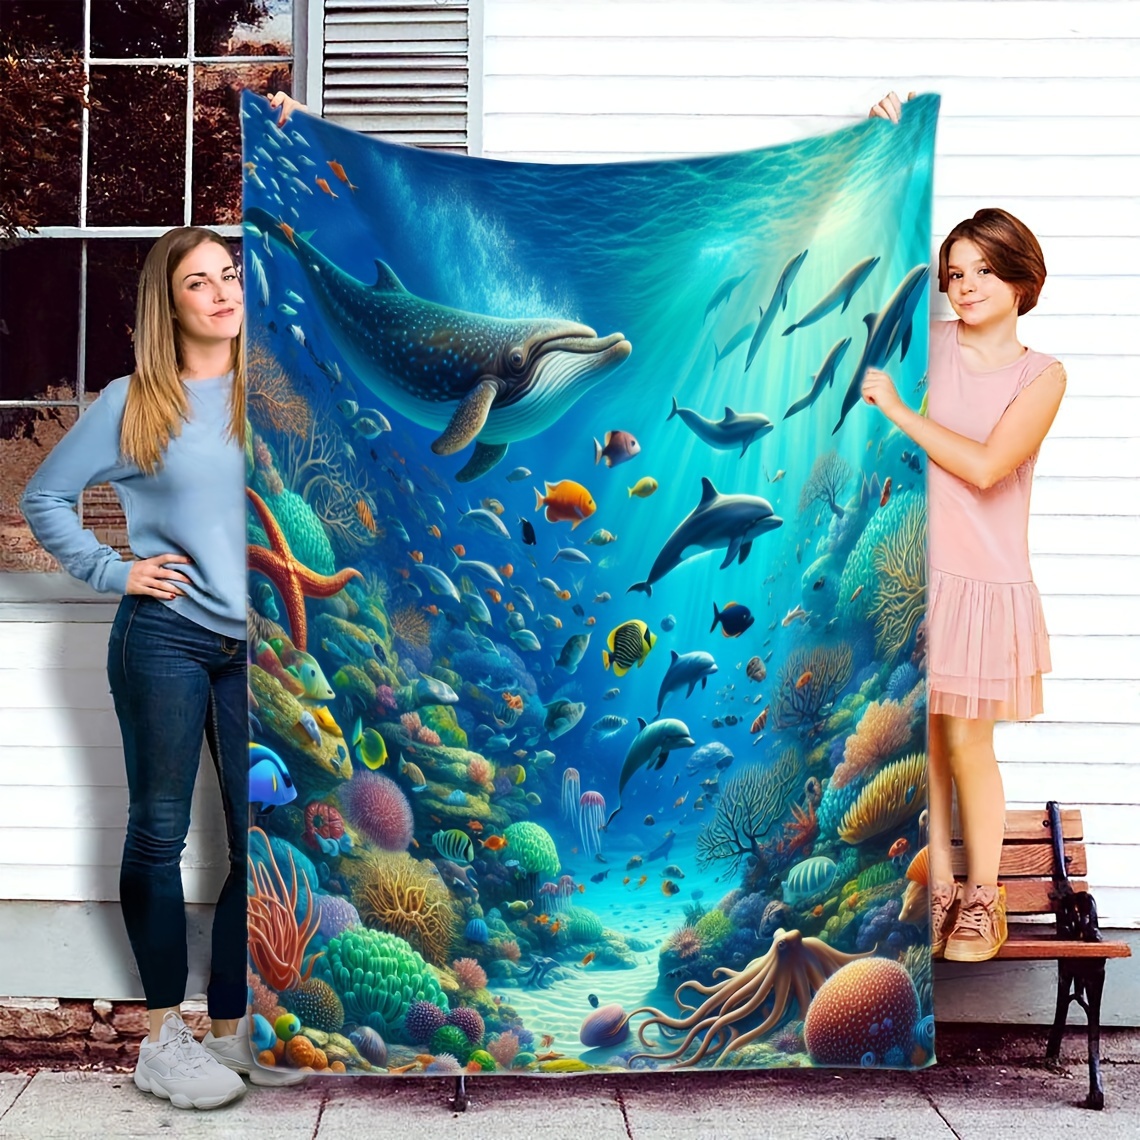 

1pc Gift For Friends Blanket Underwater World Ocean Animal Blanket Soft Flannel Sofa Blanket For Couch Office Bed Camping Travel, Multi-purpose Gift Blanket For All Season